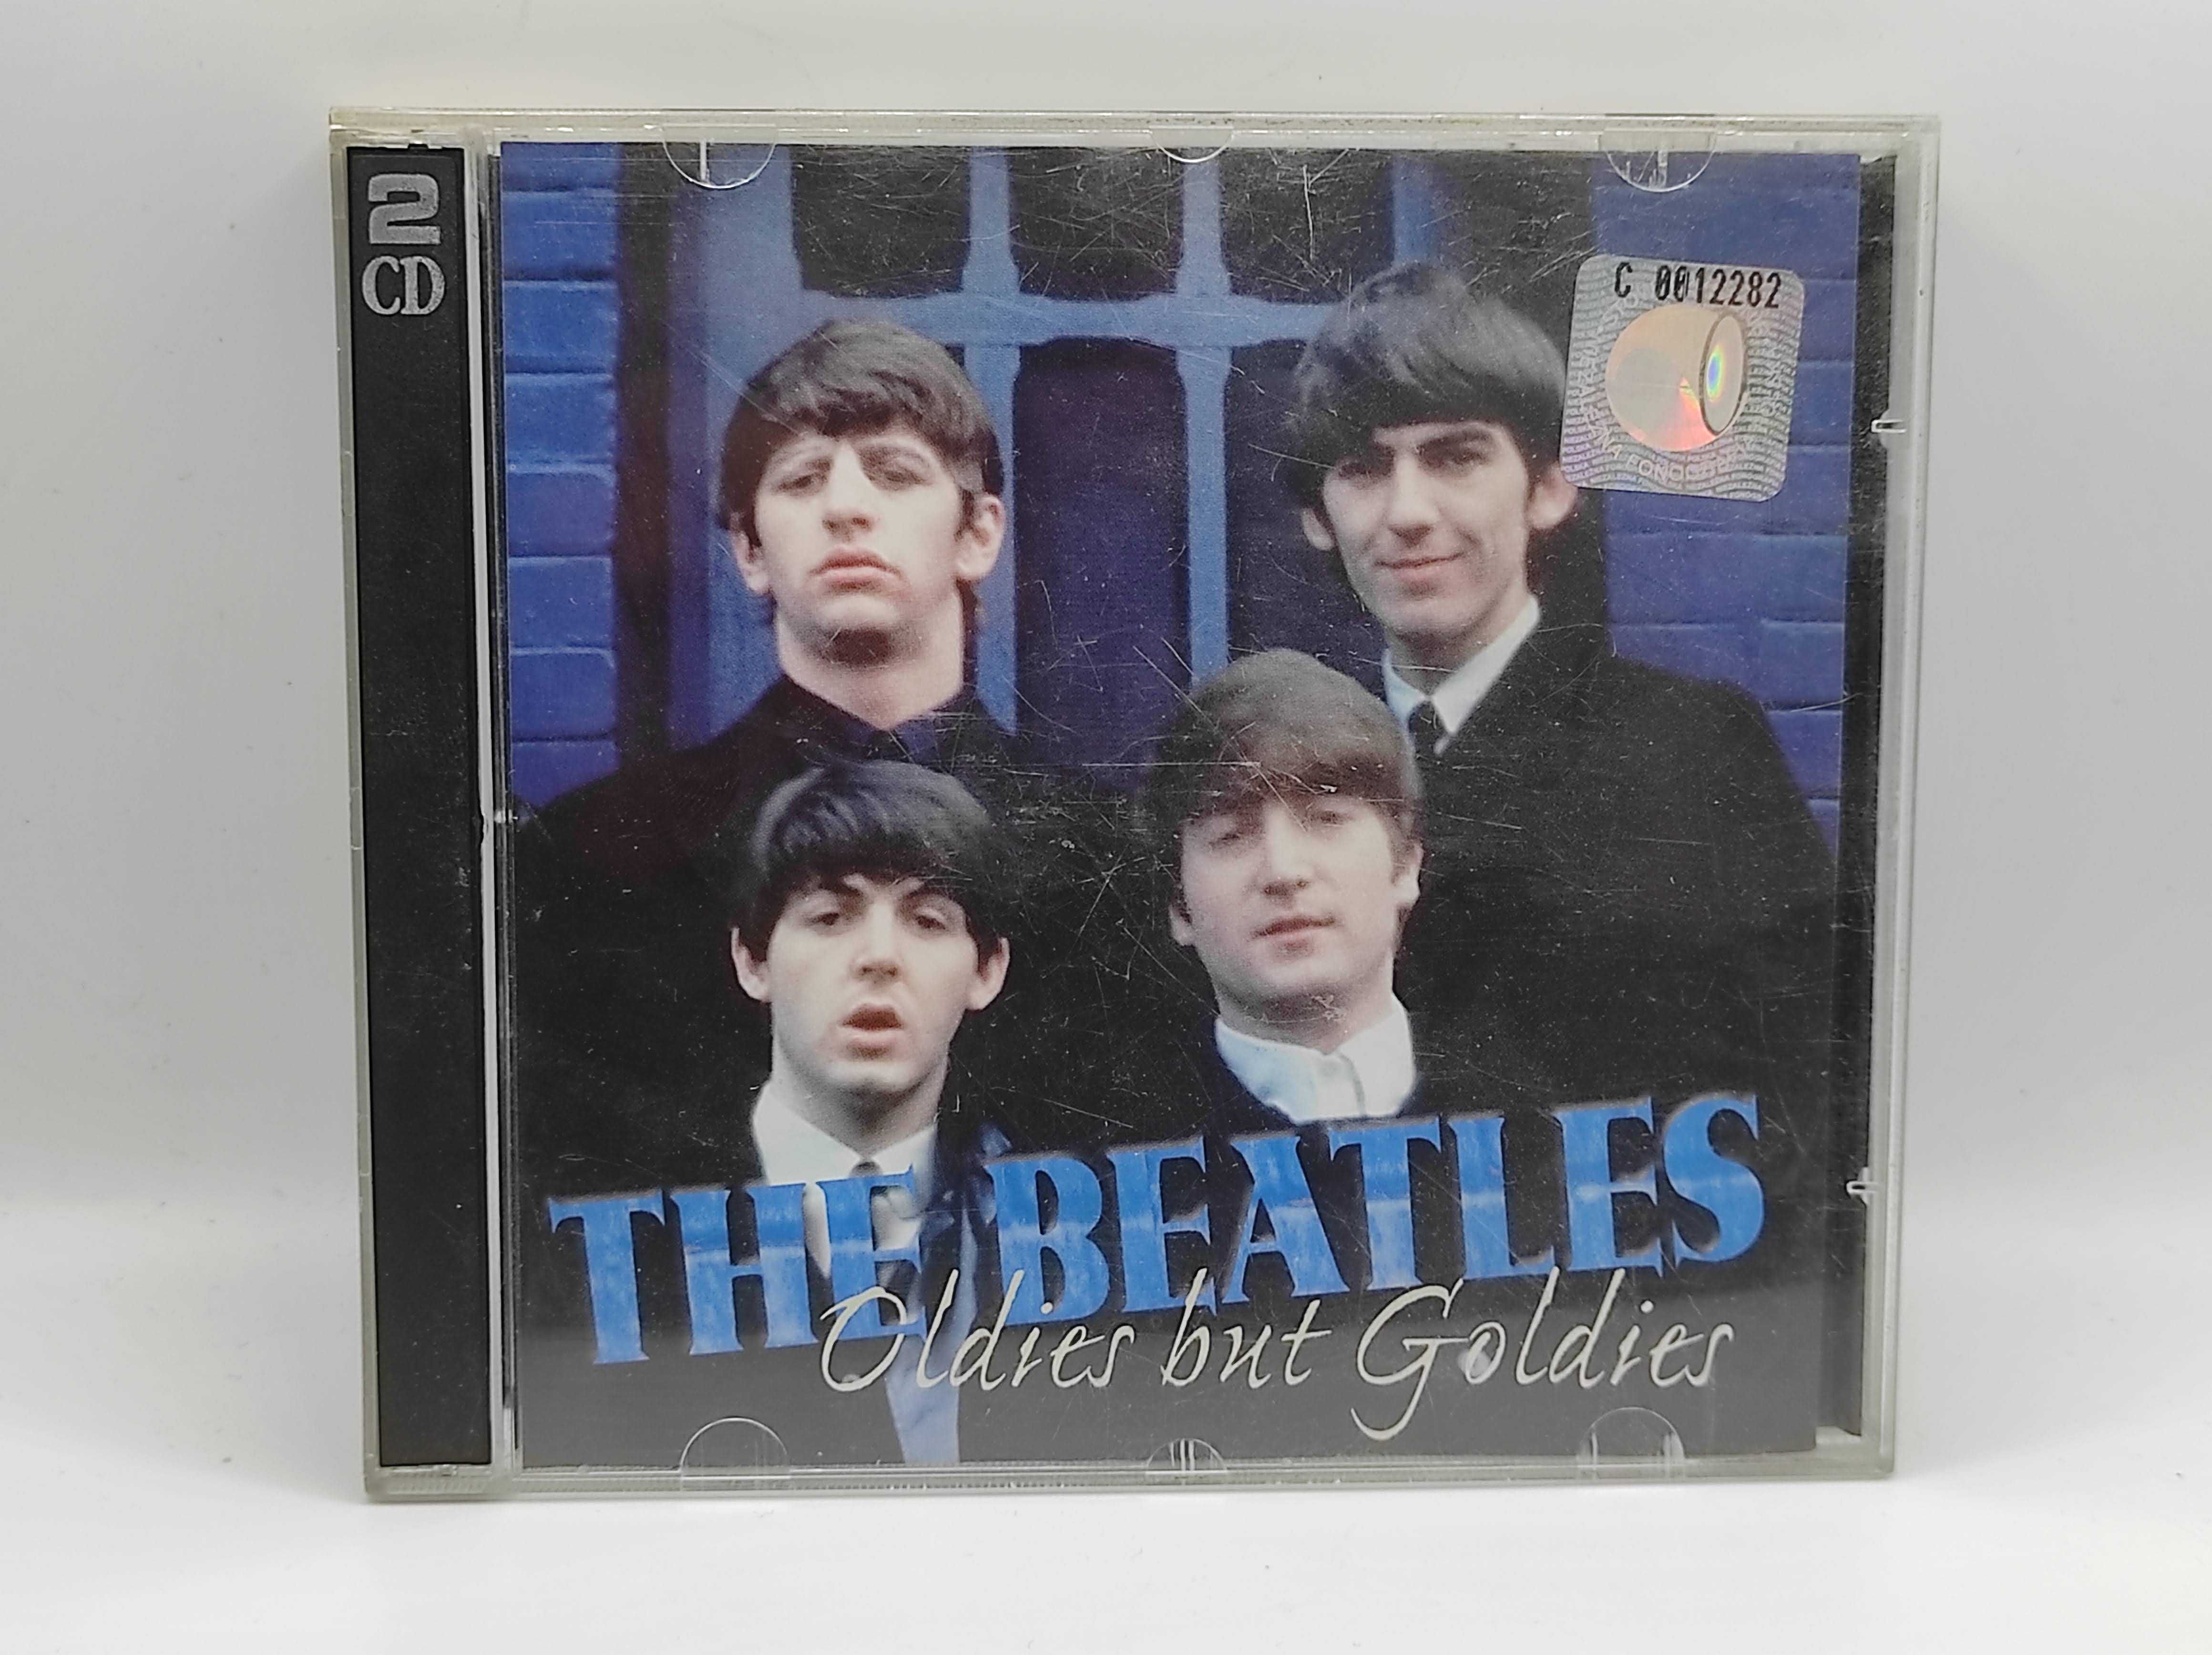 CD muzyka - The Beatles Revolver Oldies but Goldies